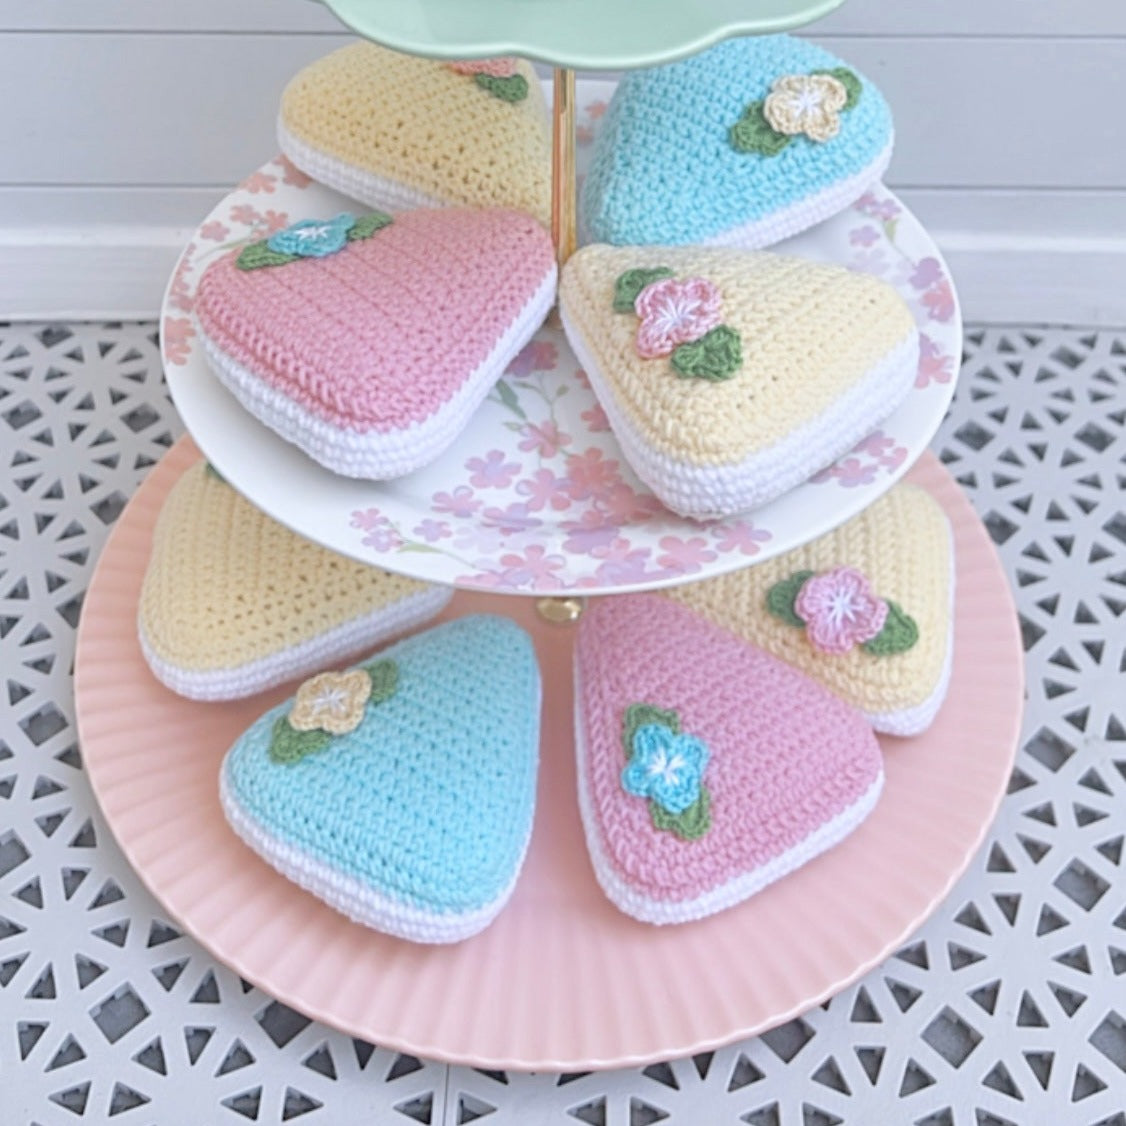 High Tea Party crochet cakes | Handmade, 3 pieces